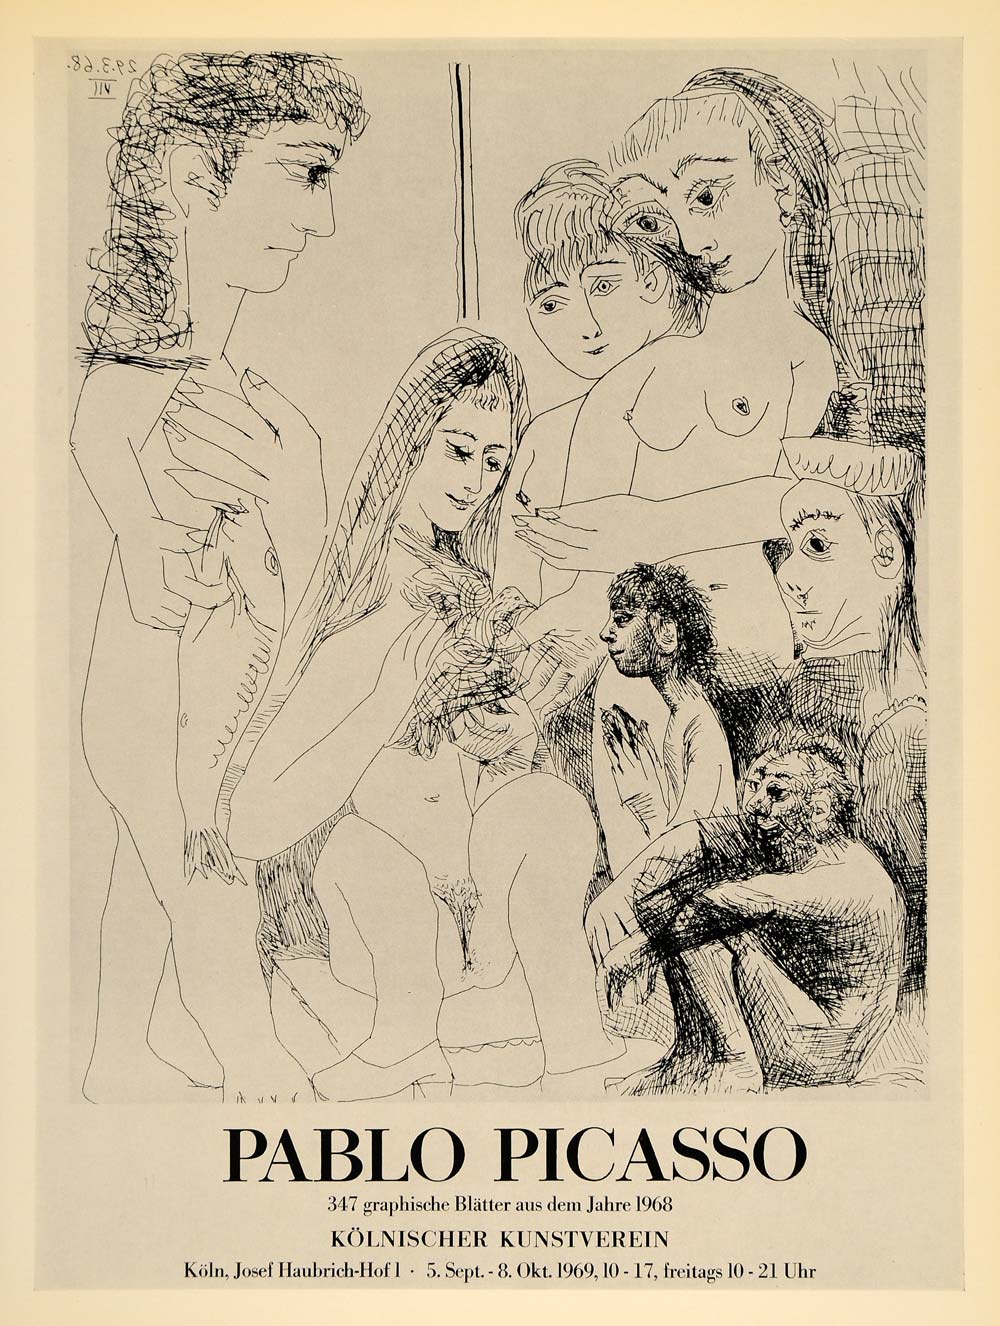 1971 Print Picasso Kolnischer Kunstverein Nudes Poster - ORIGINAL PIC3